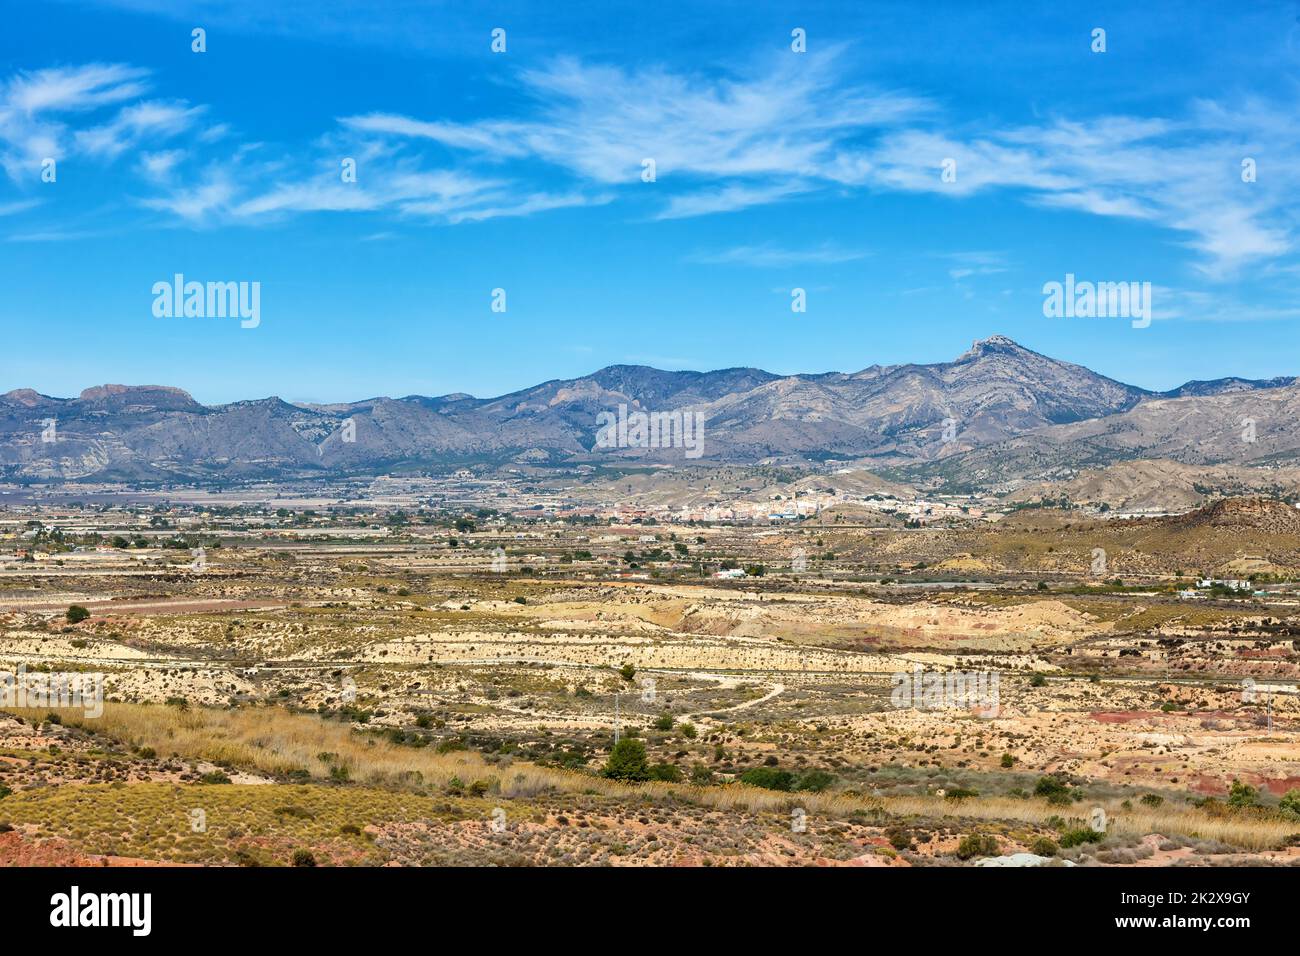 Sierra del Cid landscape scenery near Alicante Alacant mountains in Spain Stock Photo